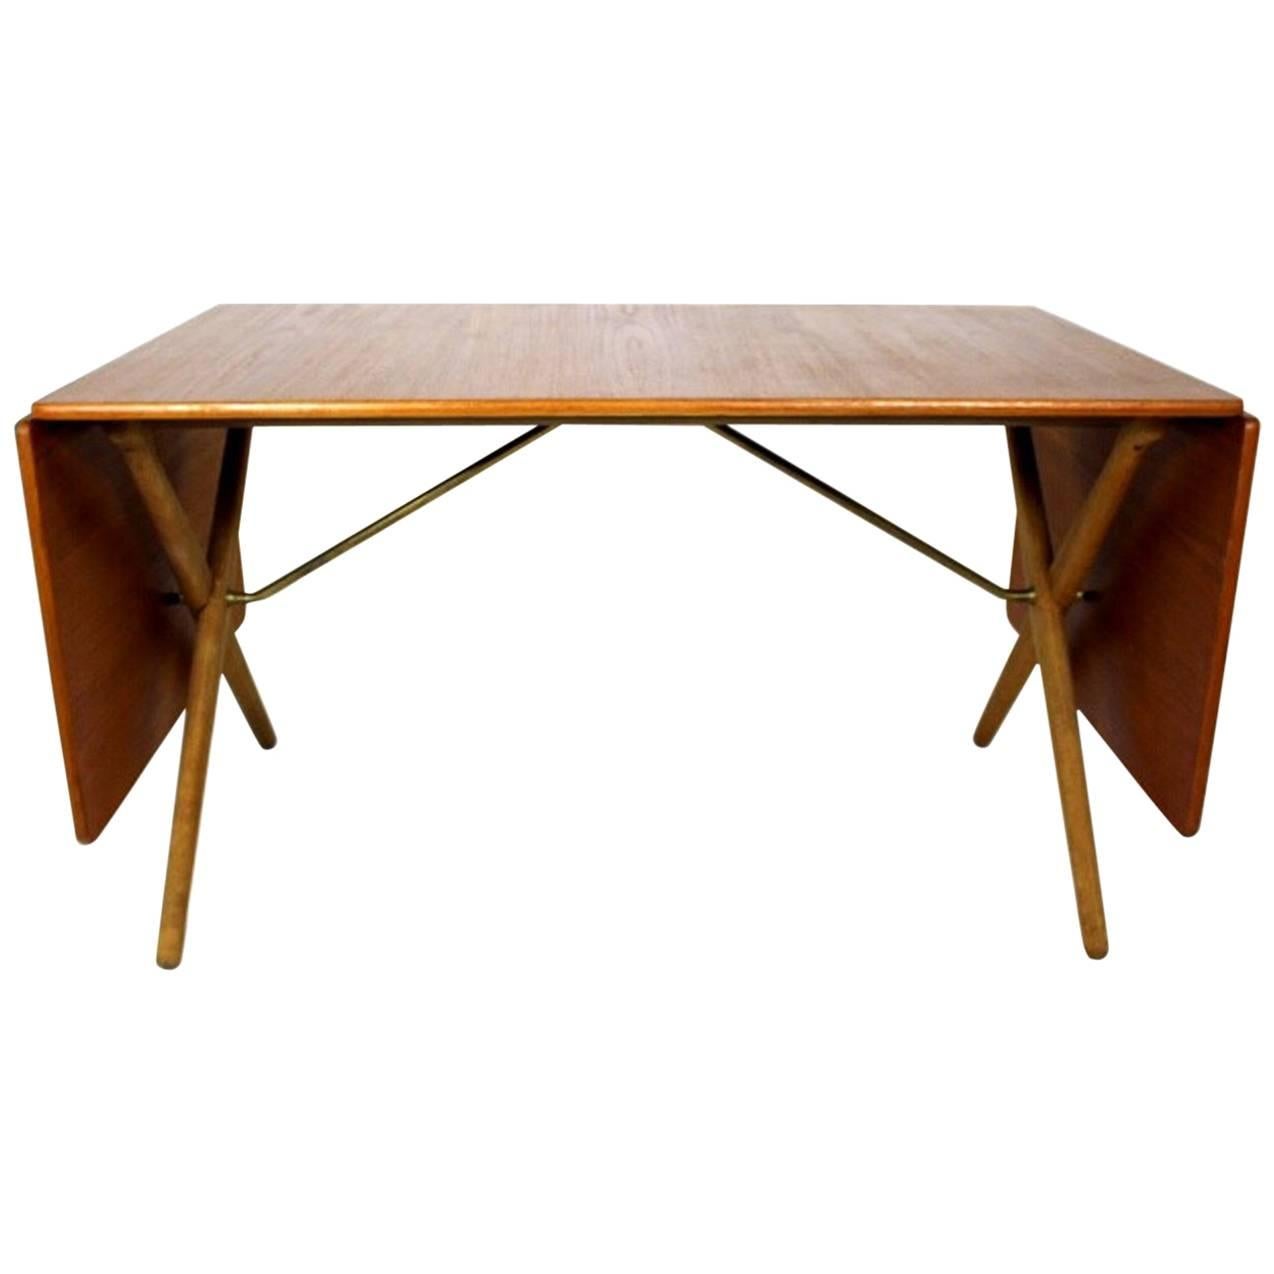 Scandinavian Dining Table with Cross-Leg, At-309 Hans J Wegner for Andreas Tuck For Sale